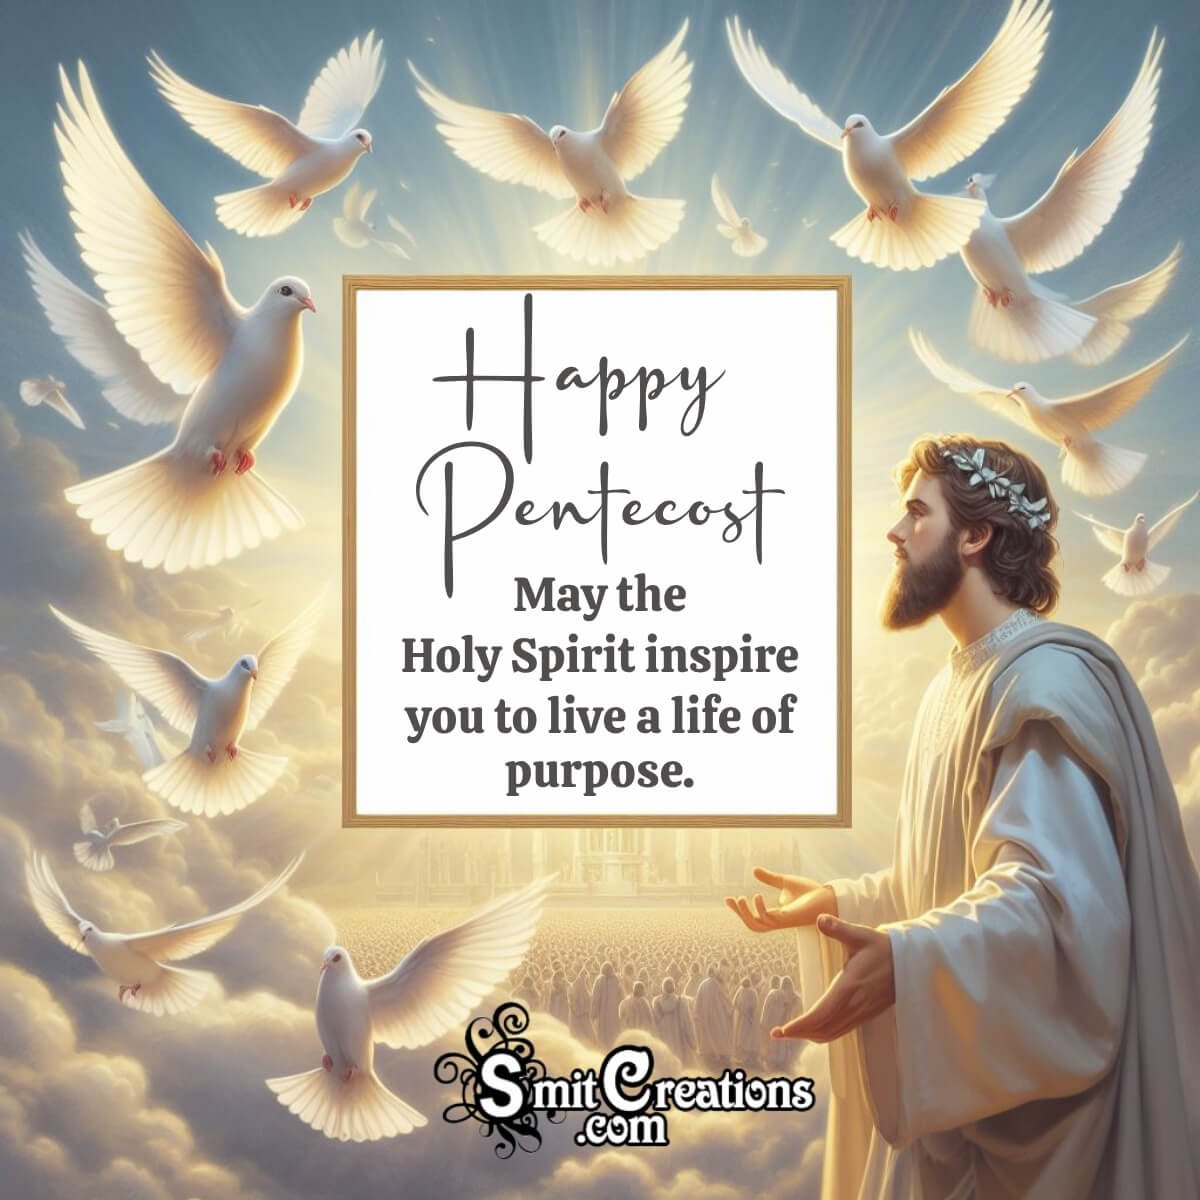 Happy Pentecost Day Message Photo